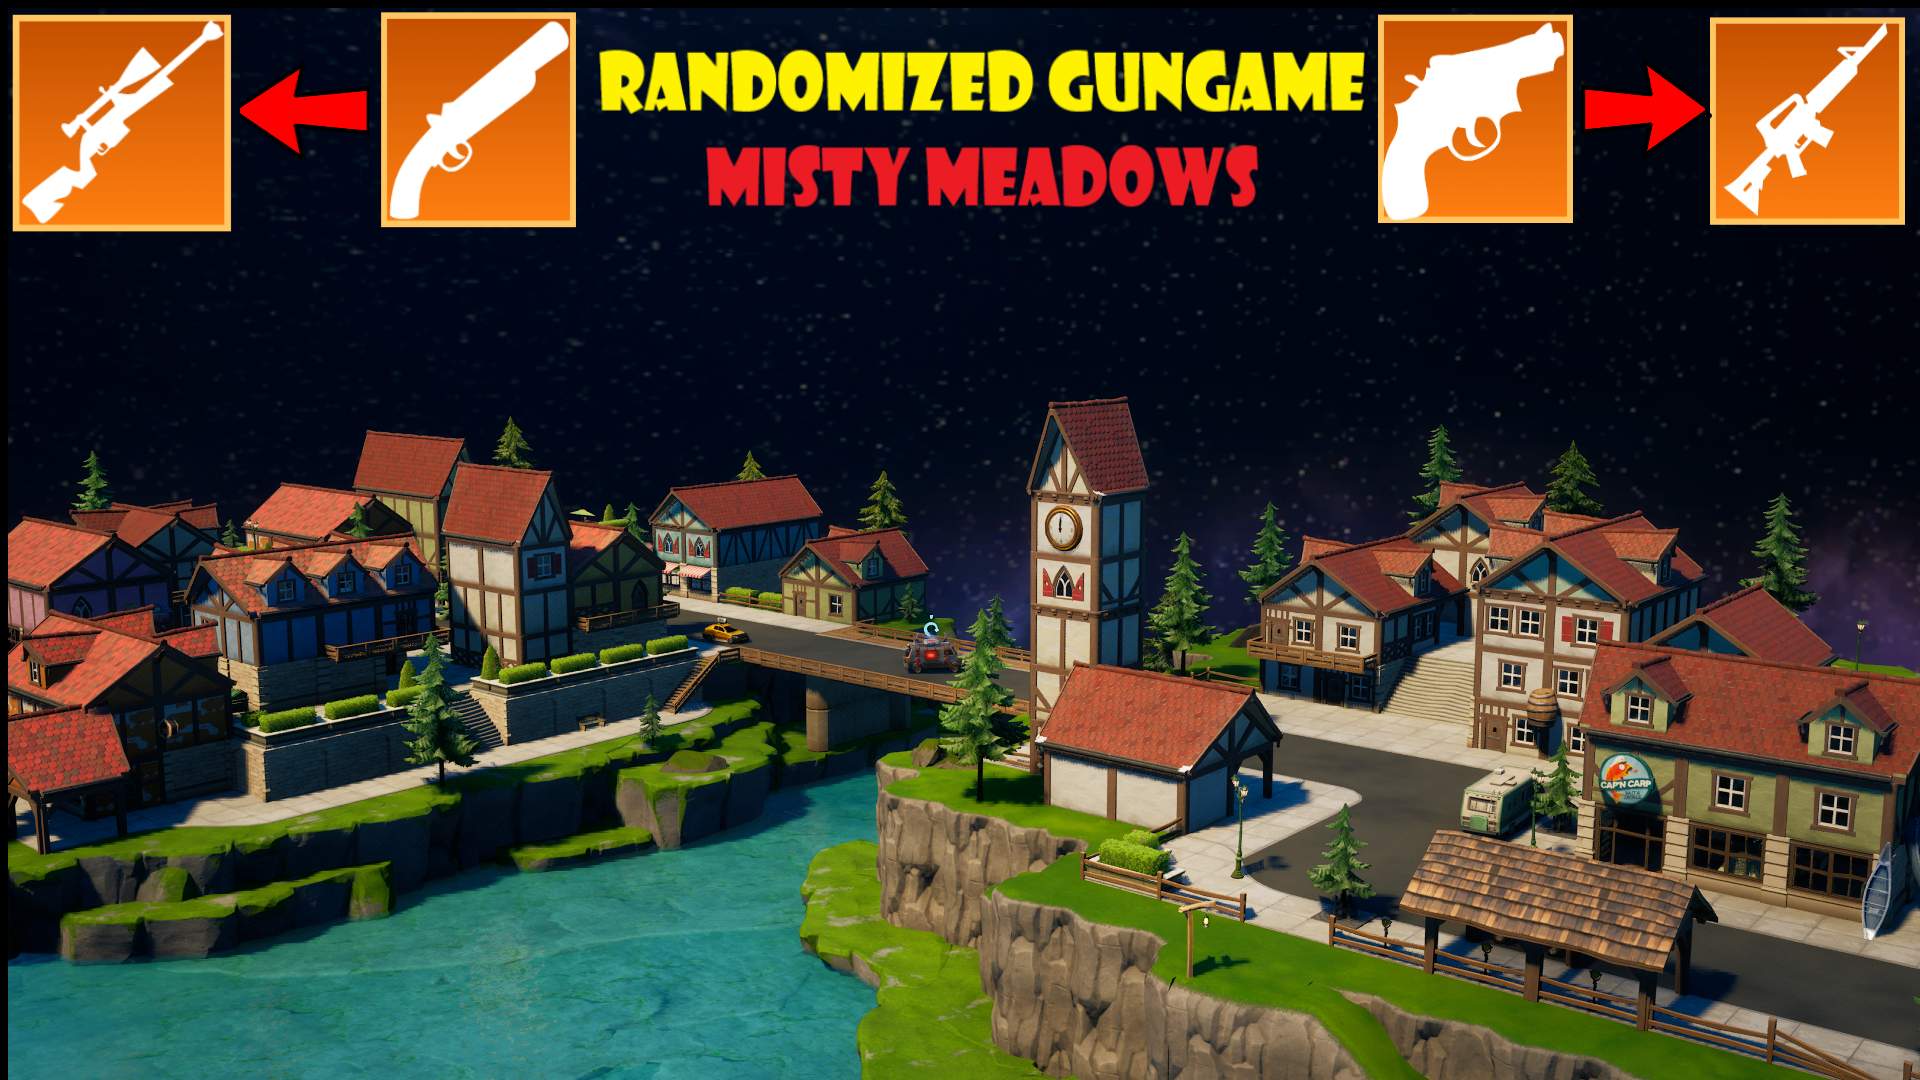 Randomized Gungame I Misty Meadows